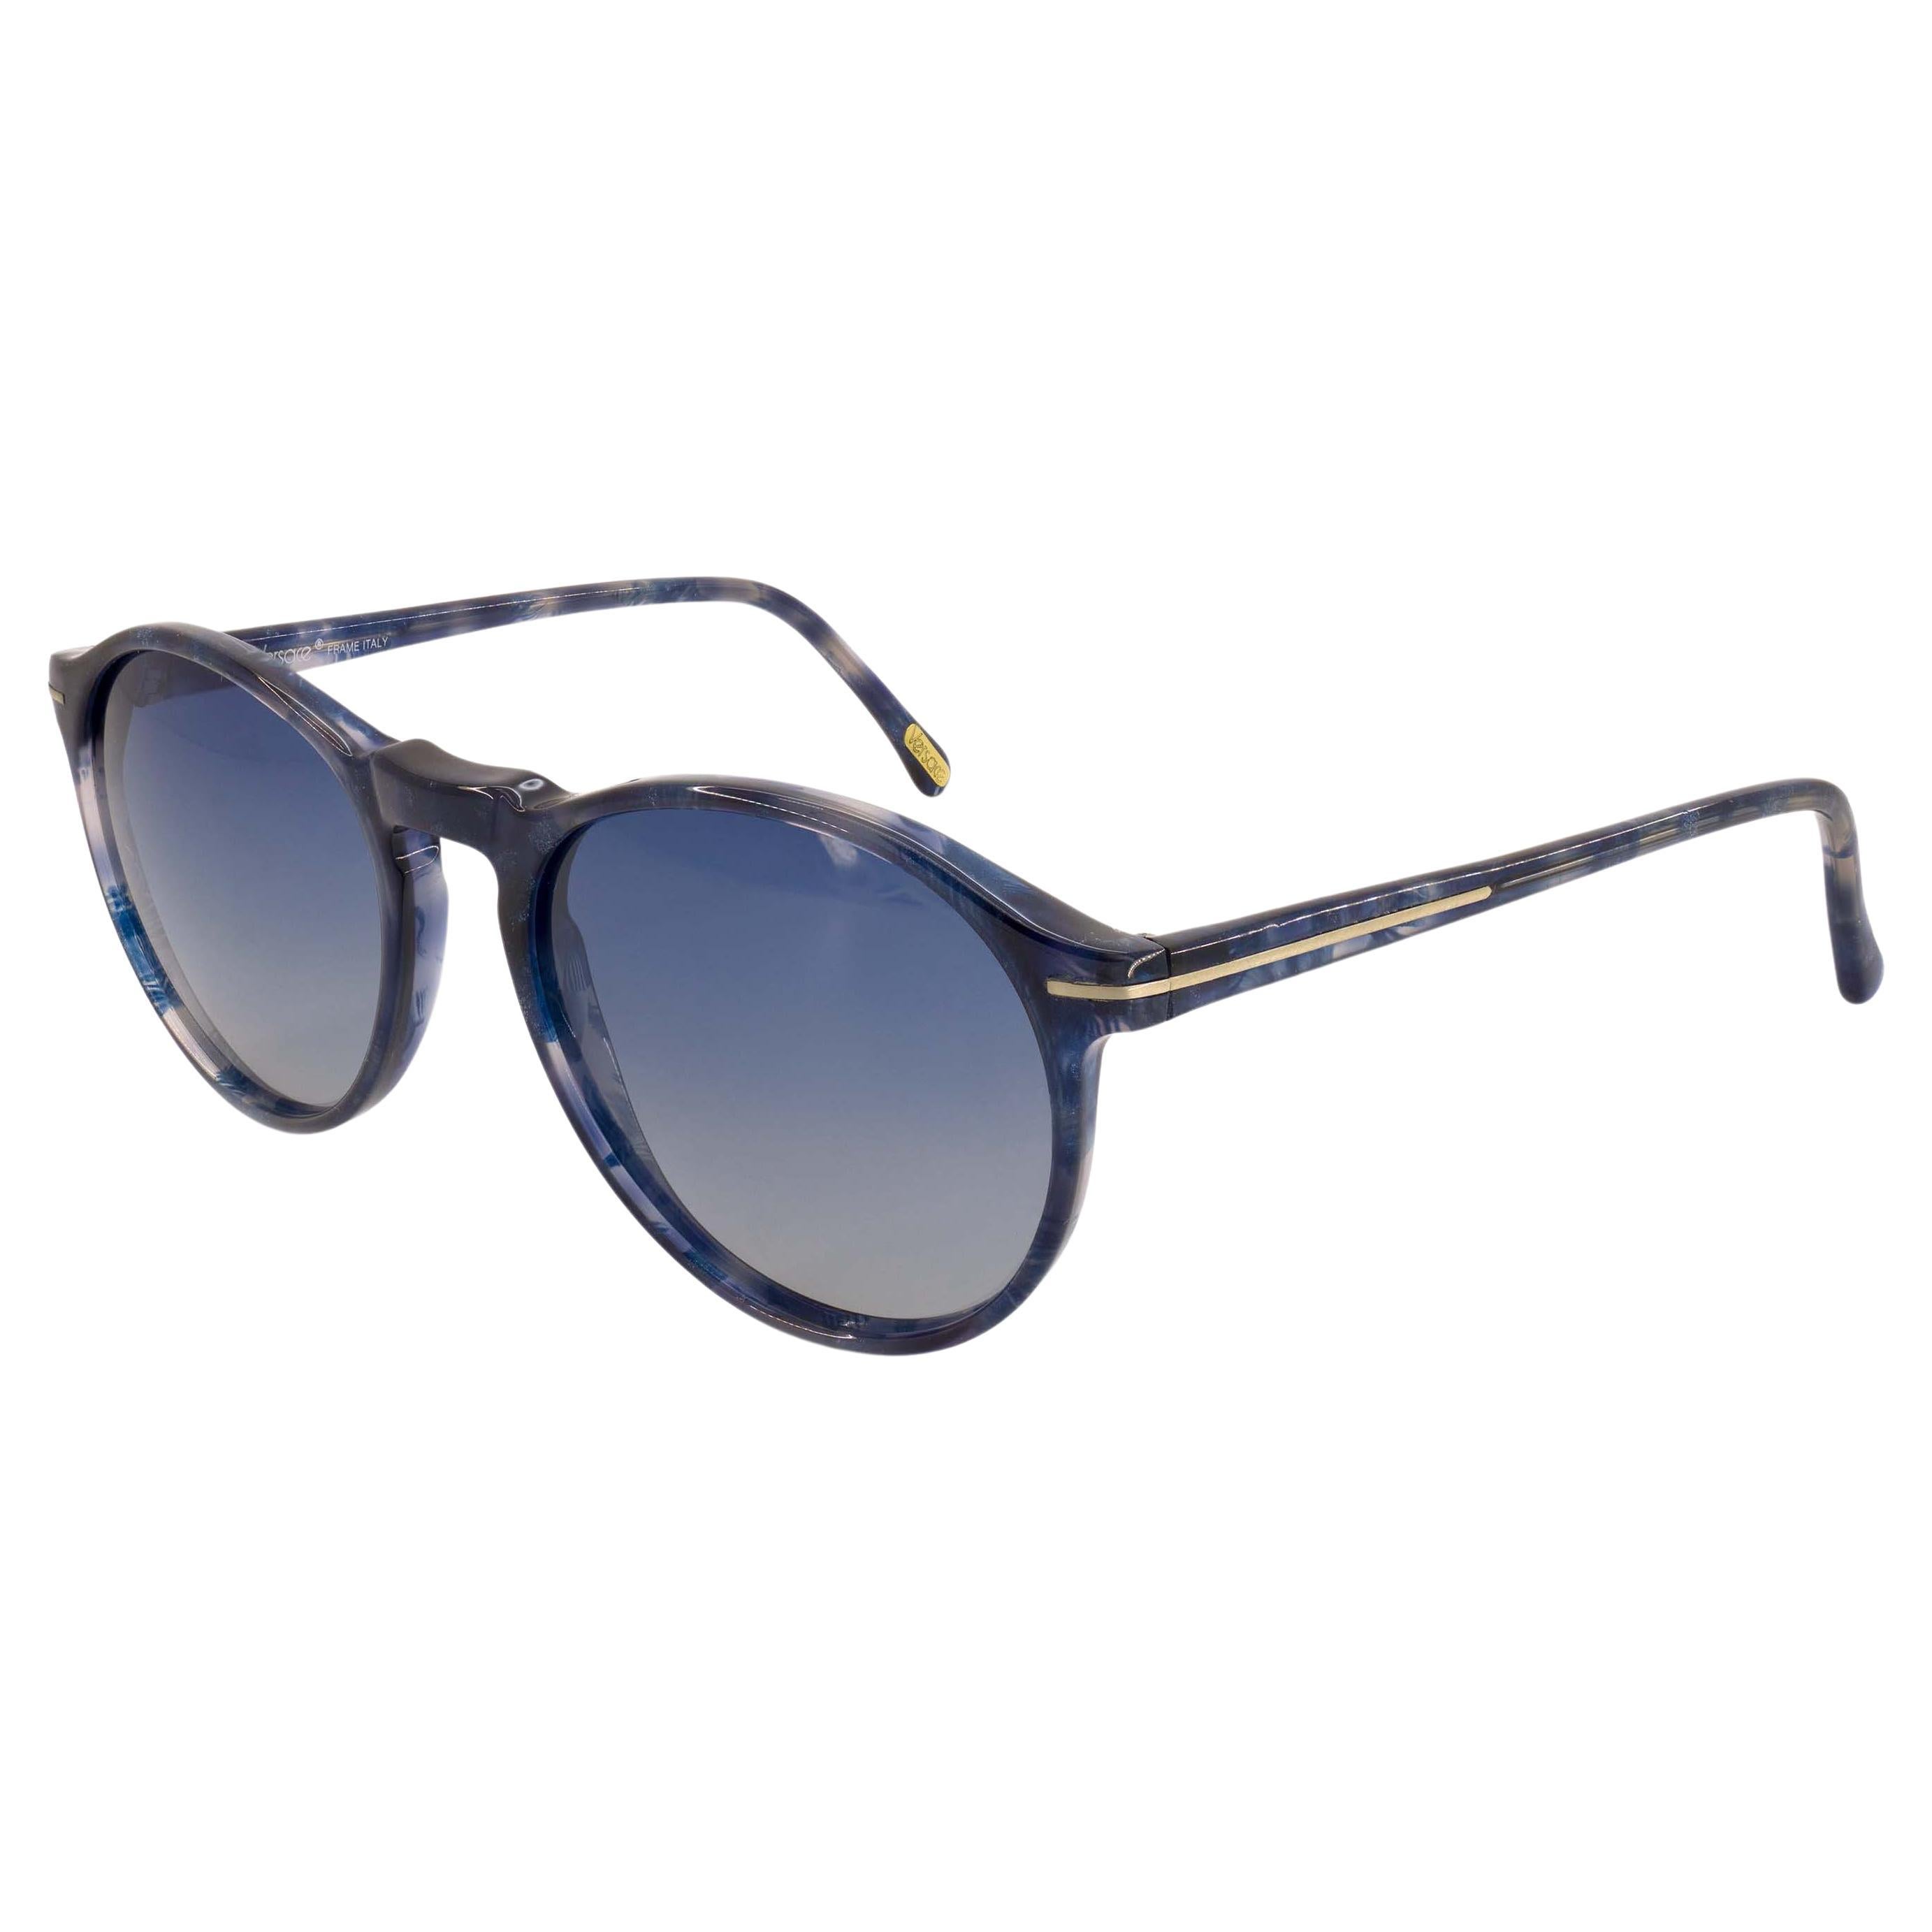 Gianni Versace vintage sunglasses 70s For Sale